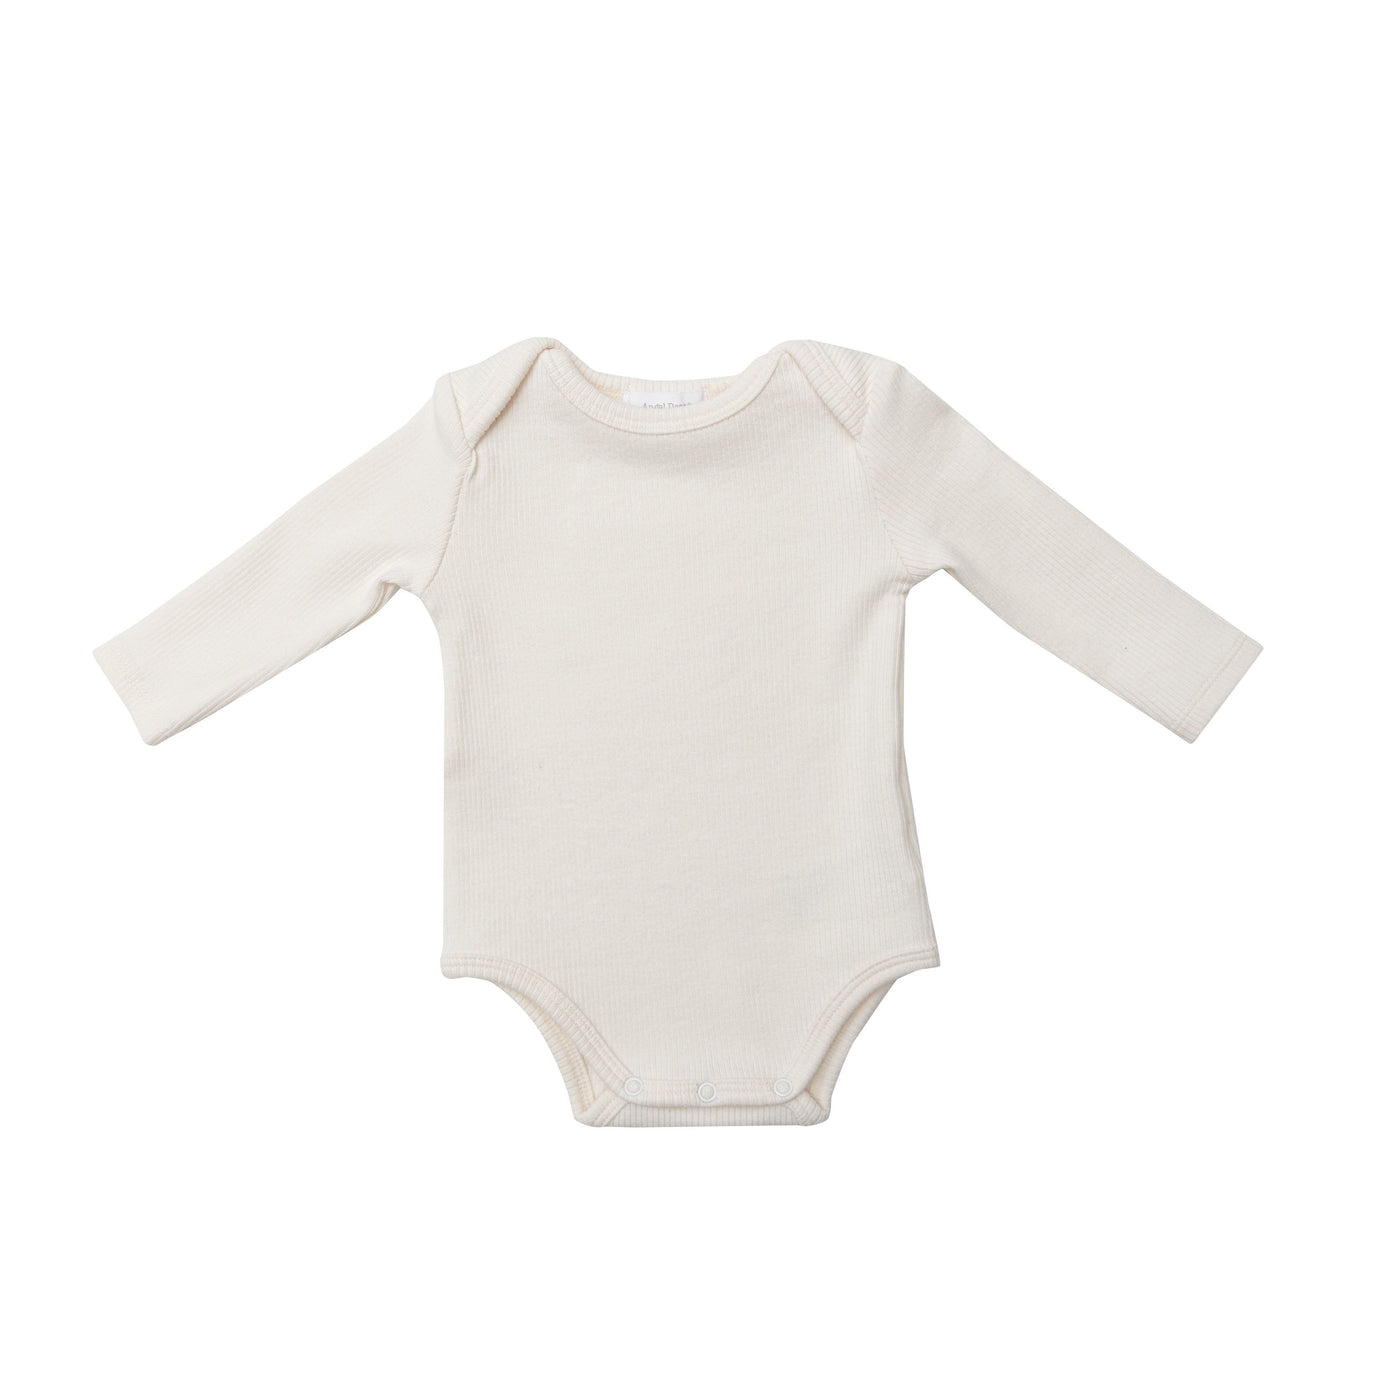 Sugar Swizzle Bodysuit - White - Breckenridge Baby